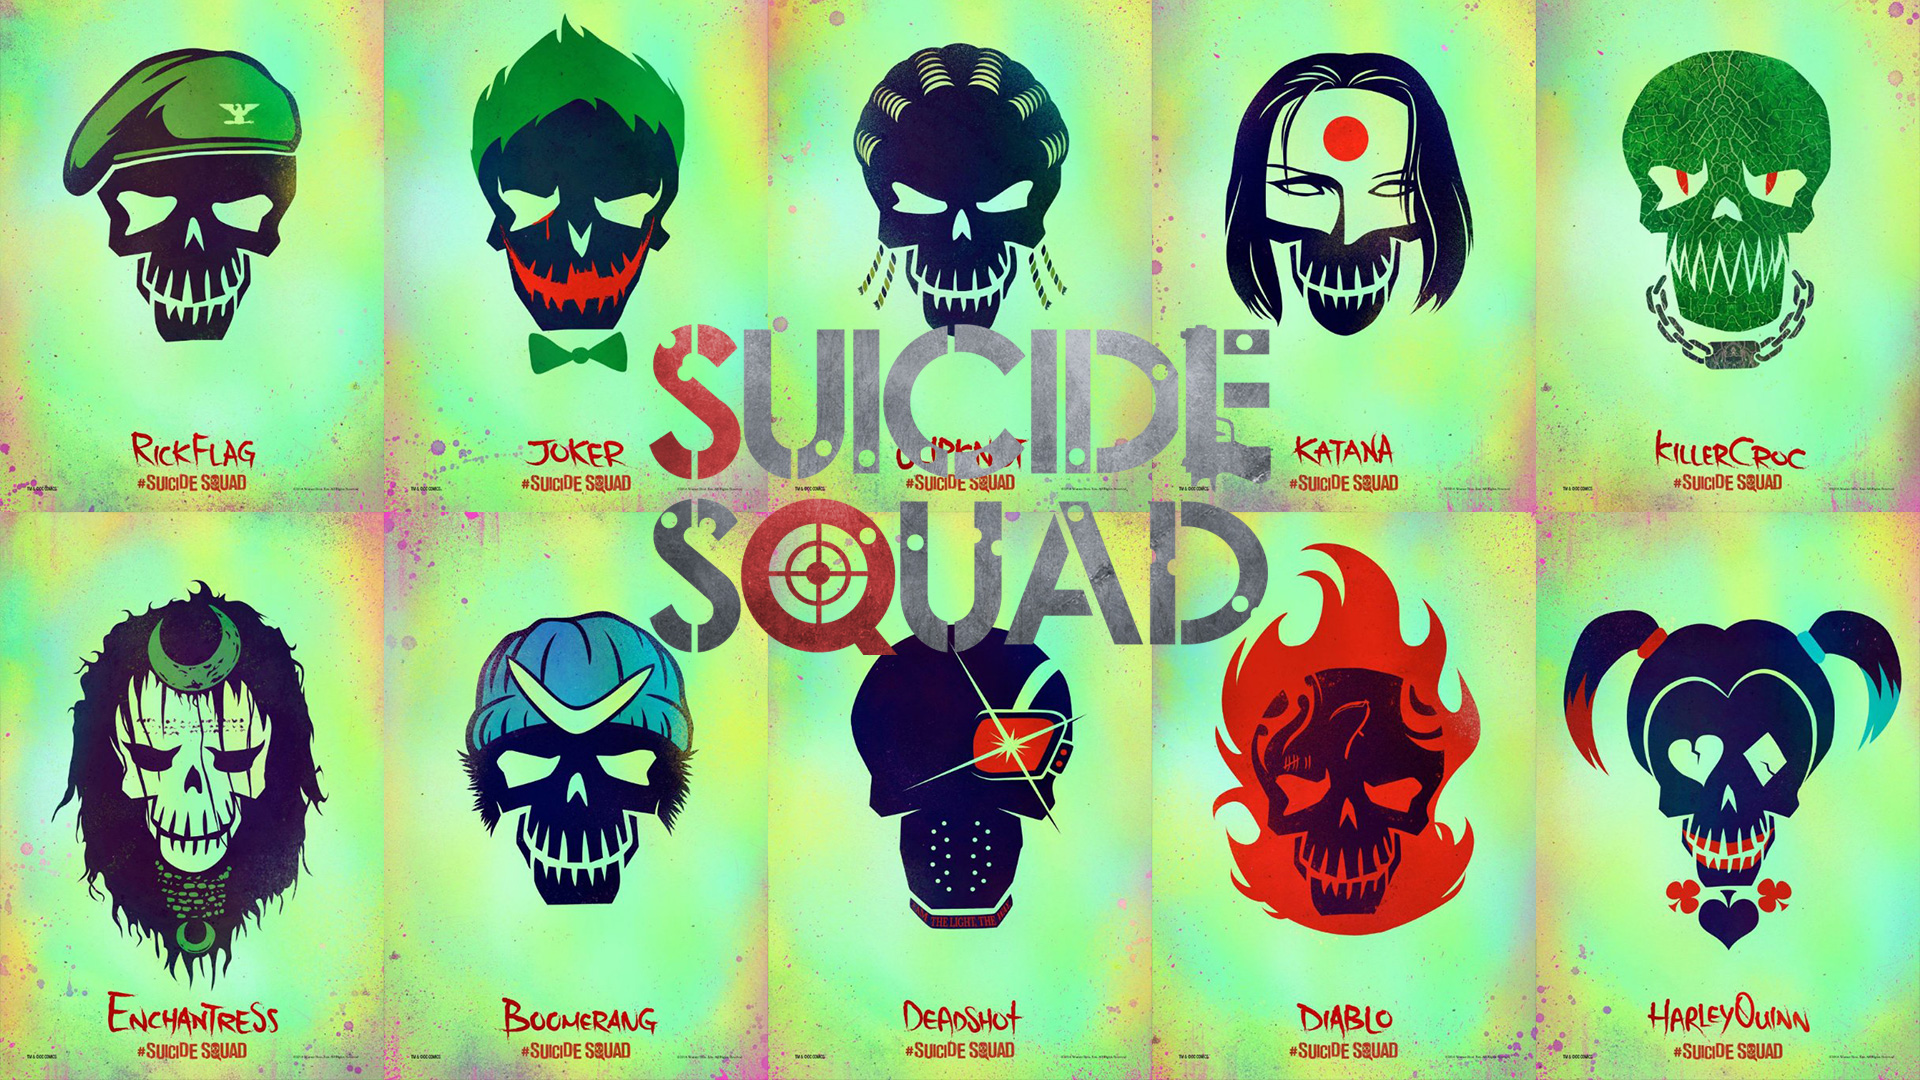 46+] Suicide Squad Movie Wallpaper - WallpaperSafari